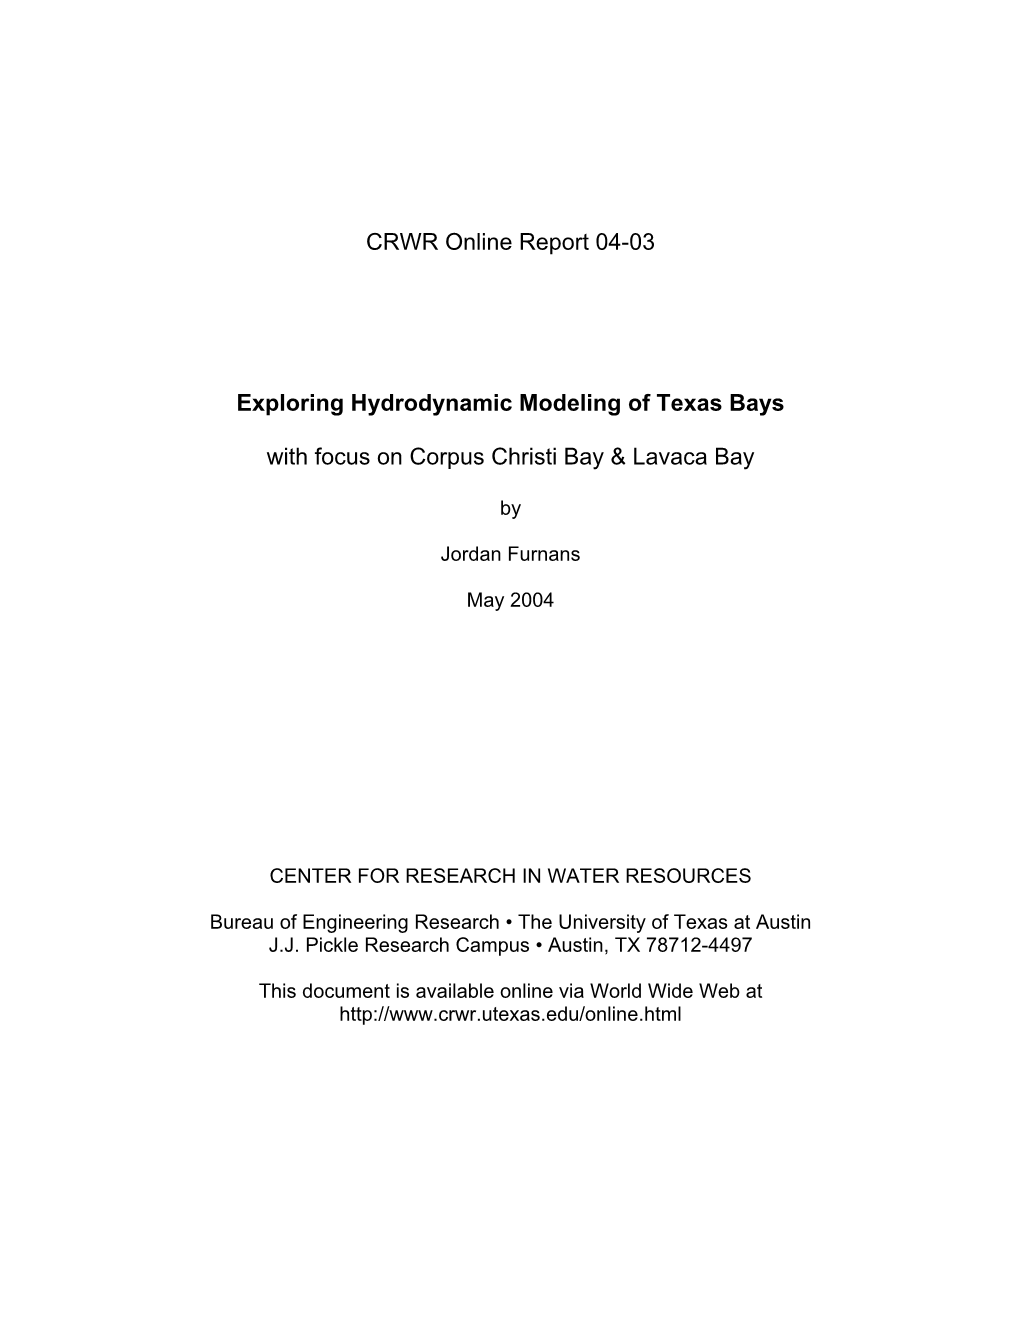 CRWR Online Report 04-03 Exploring Hydrodynamic Modeling of Texas